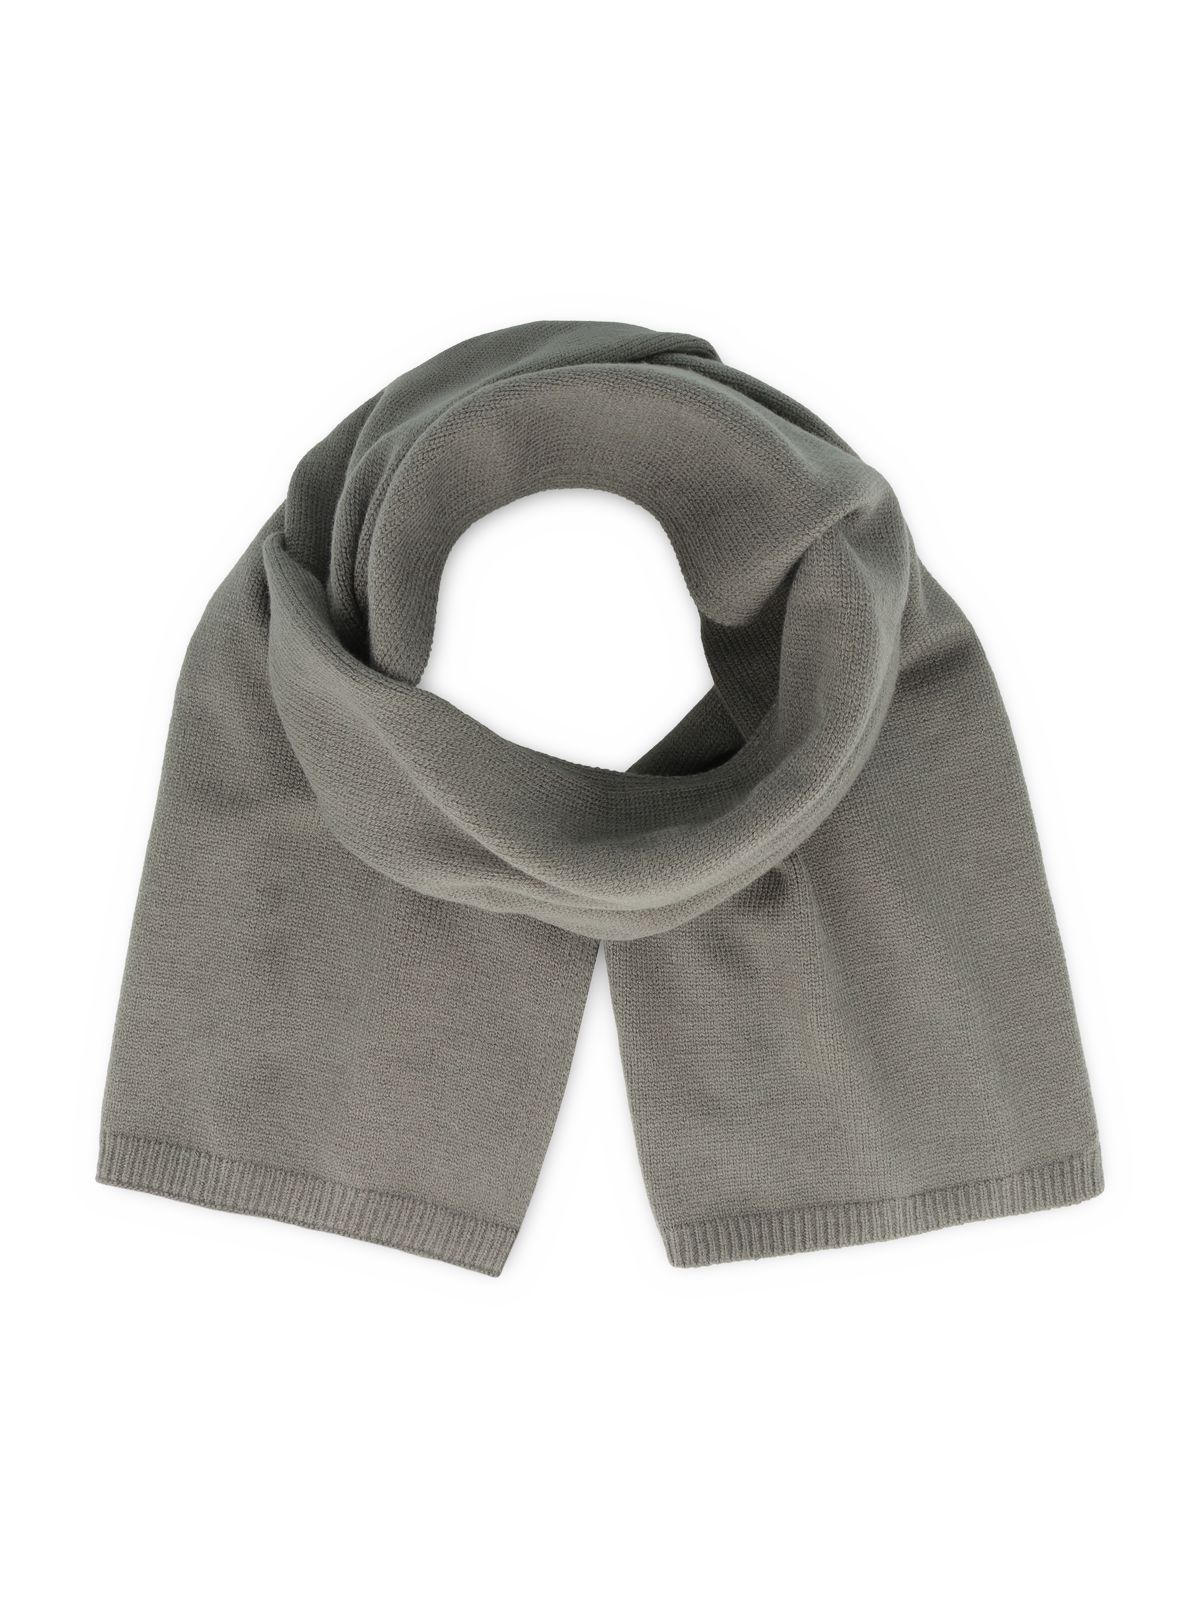 wind-scarf-s-dark-grey.webp